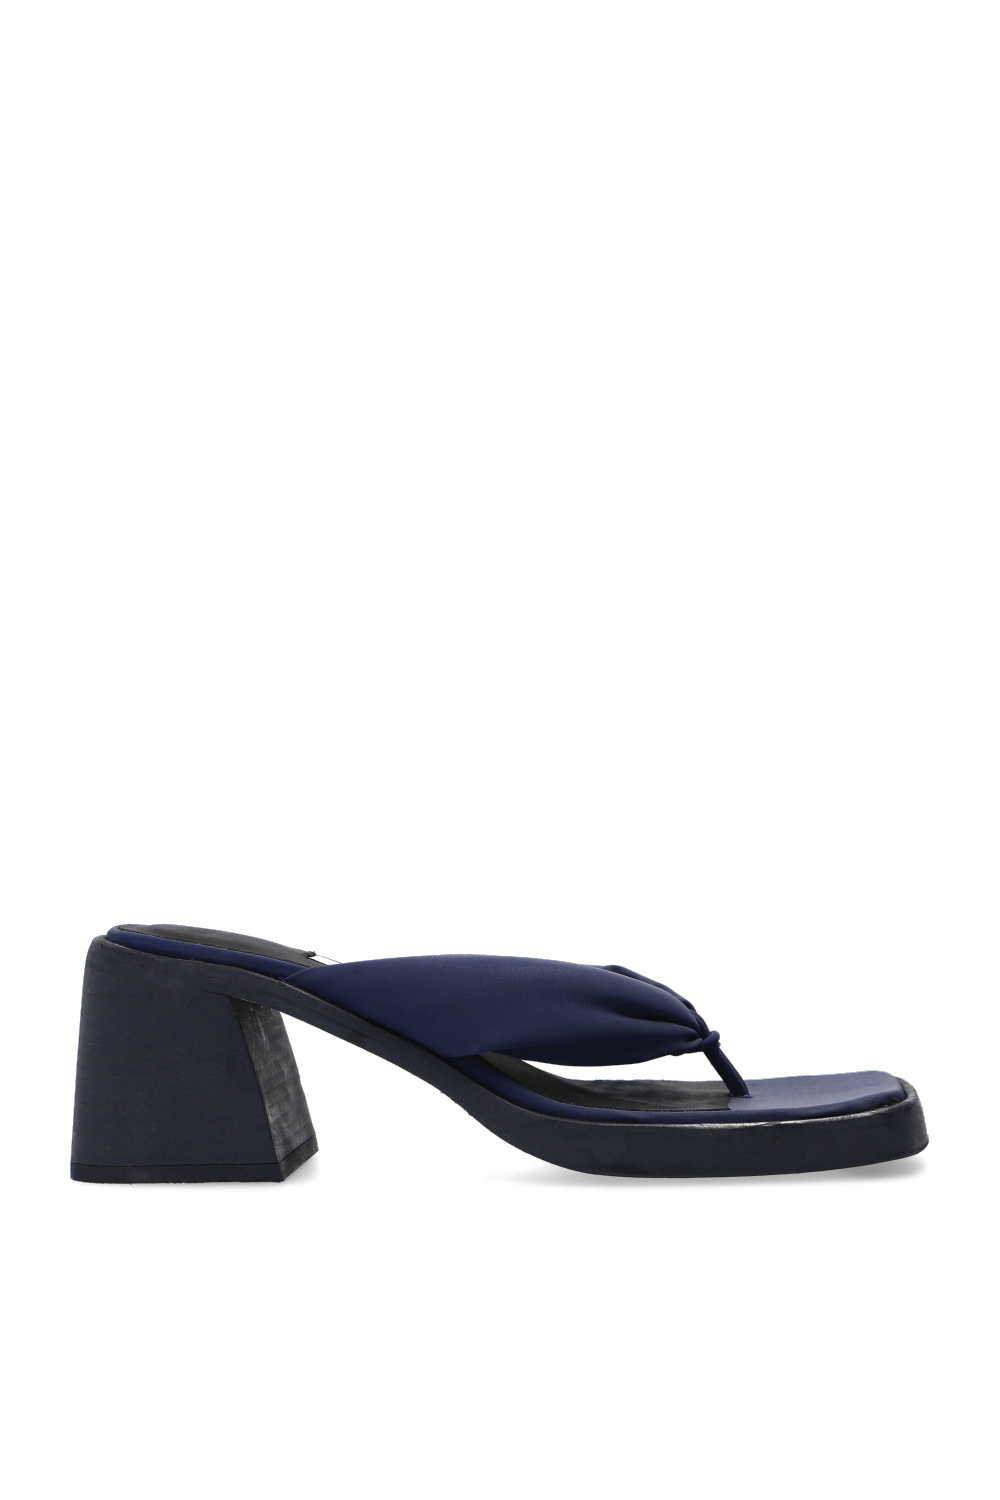 Miista ‘April’ heeled flip-flops